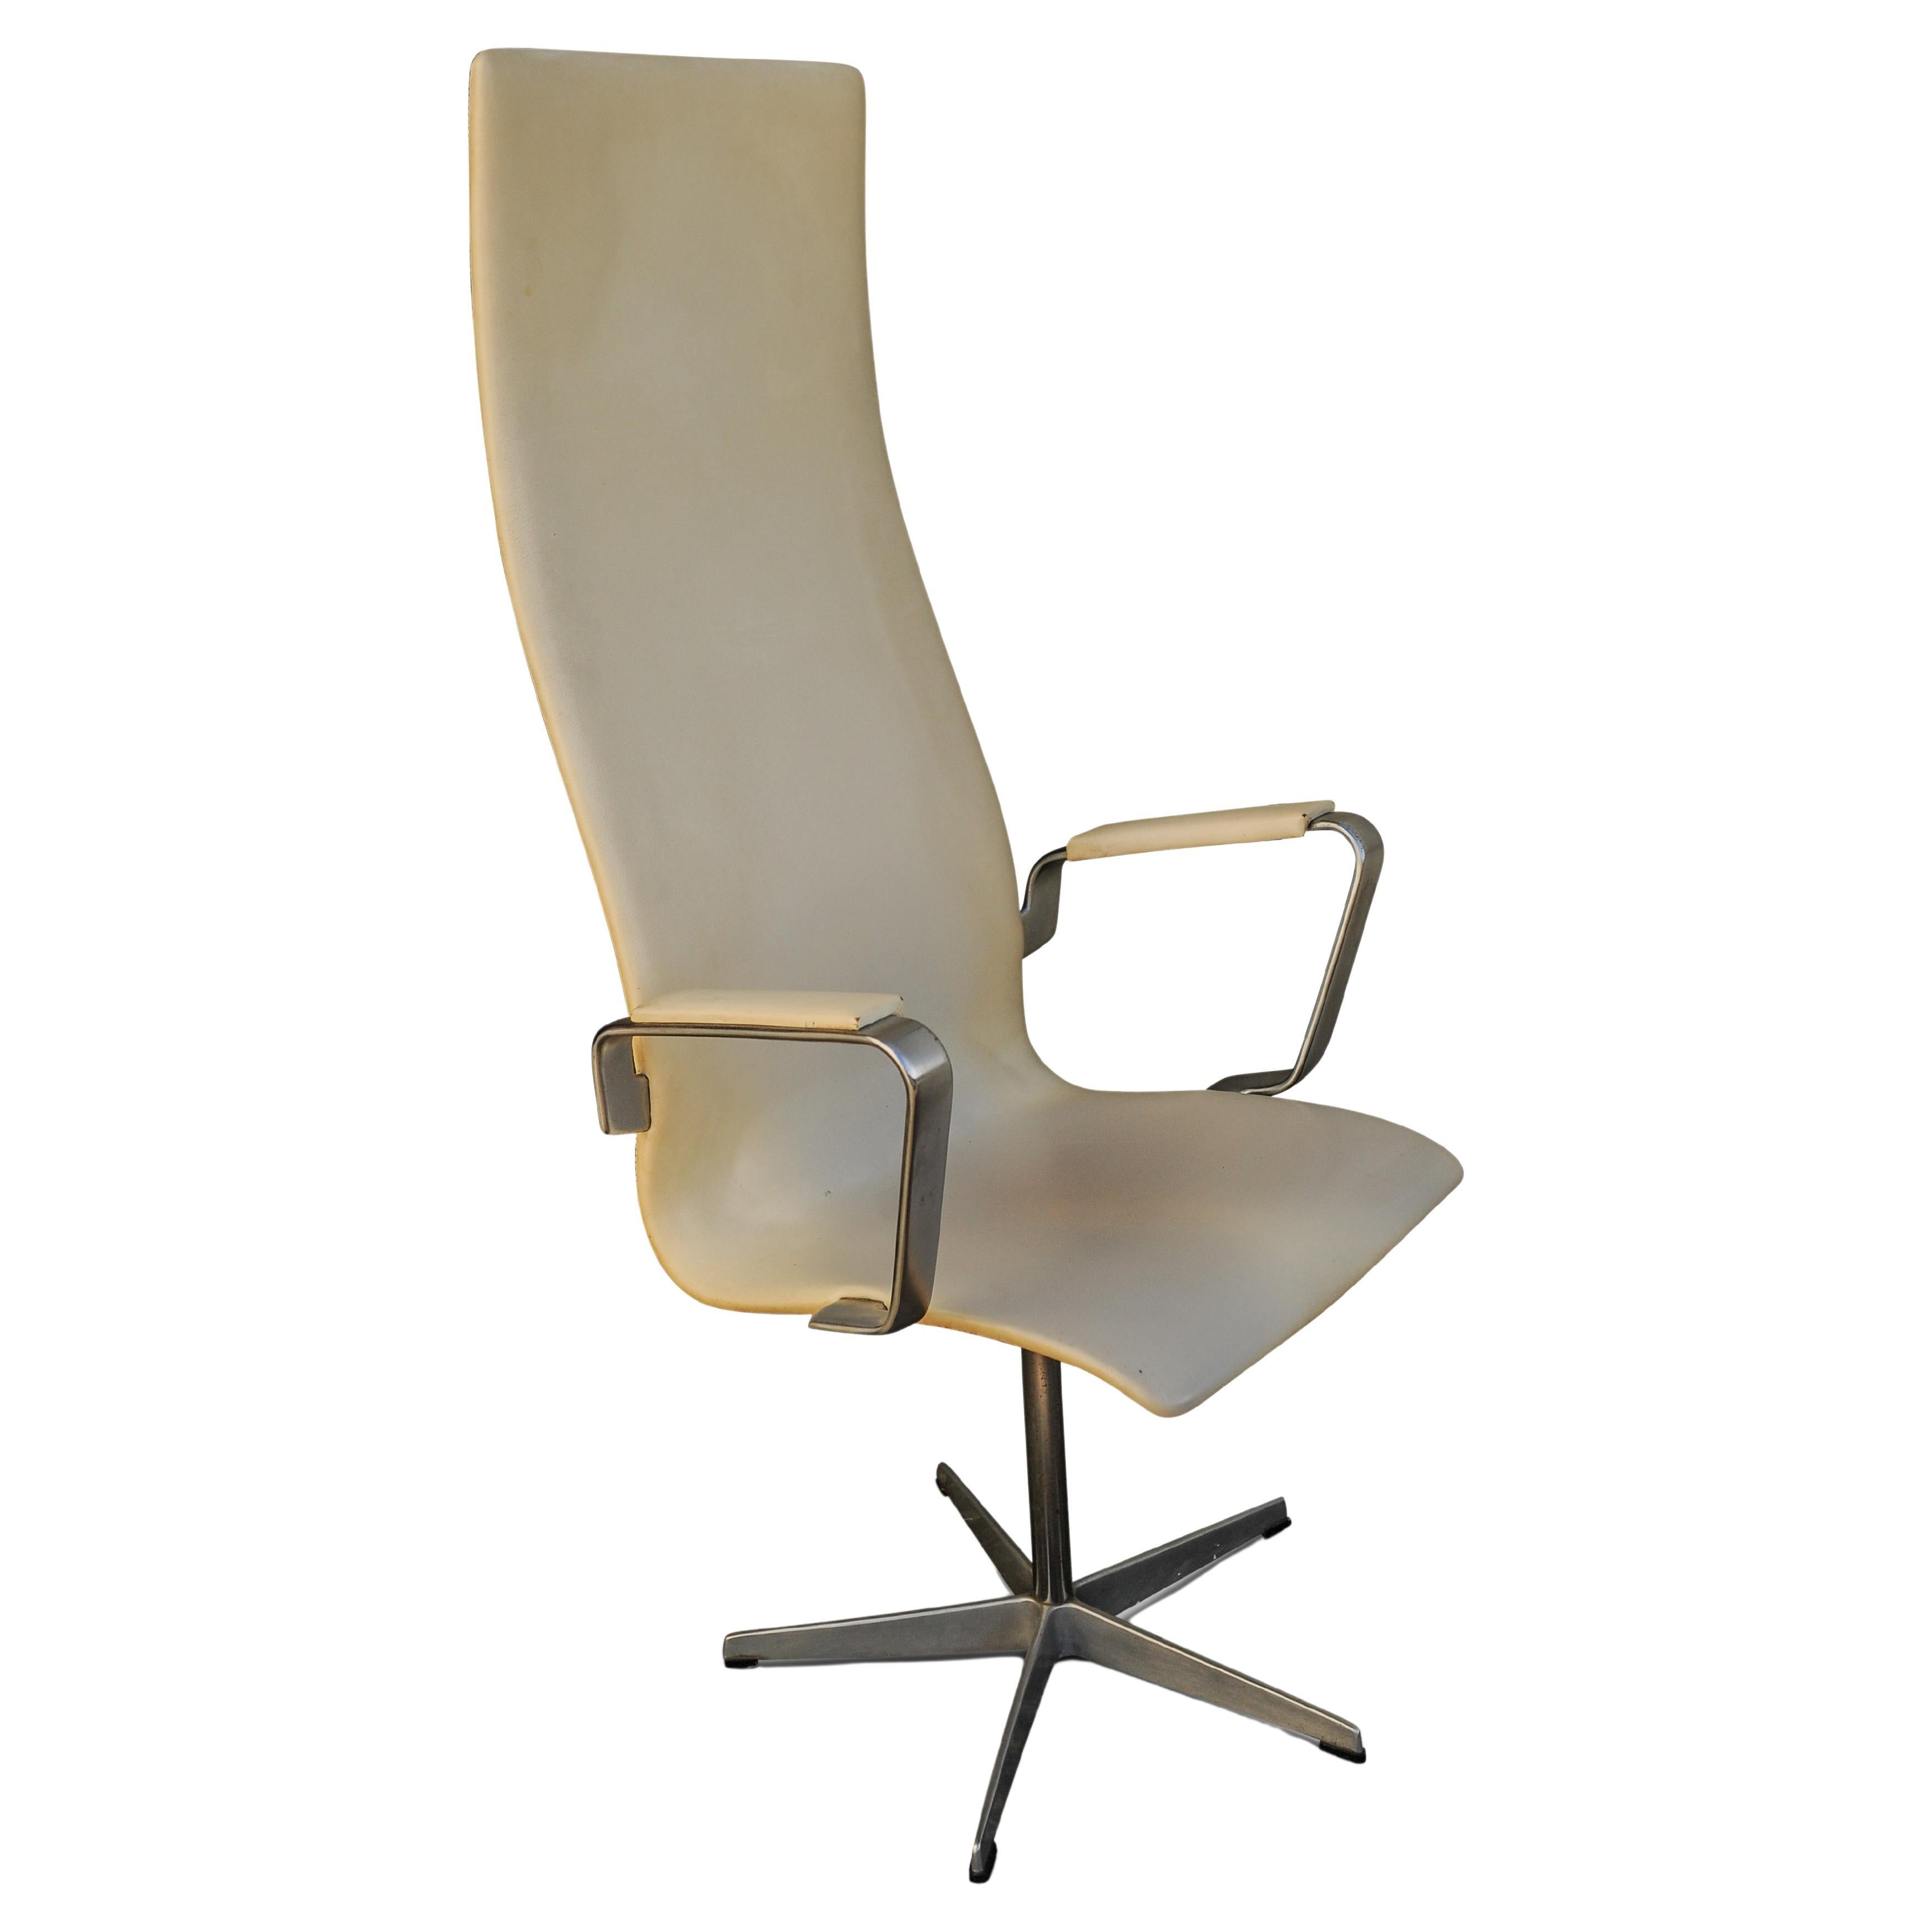  Arne Jacobsen for Fritz Hansen An Original 1970's Cream Leather "Oxford" Chair